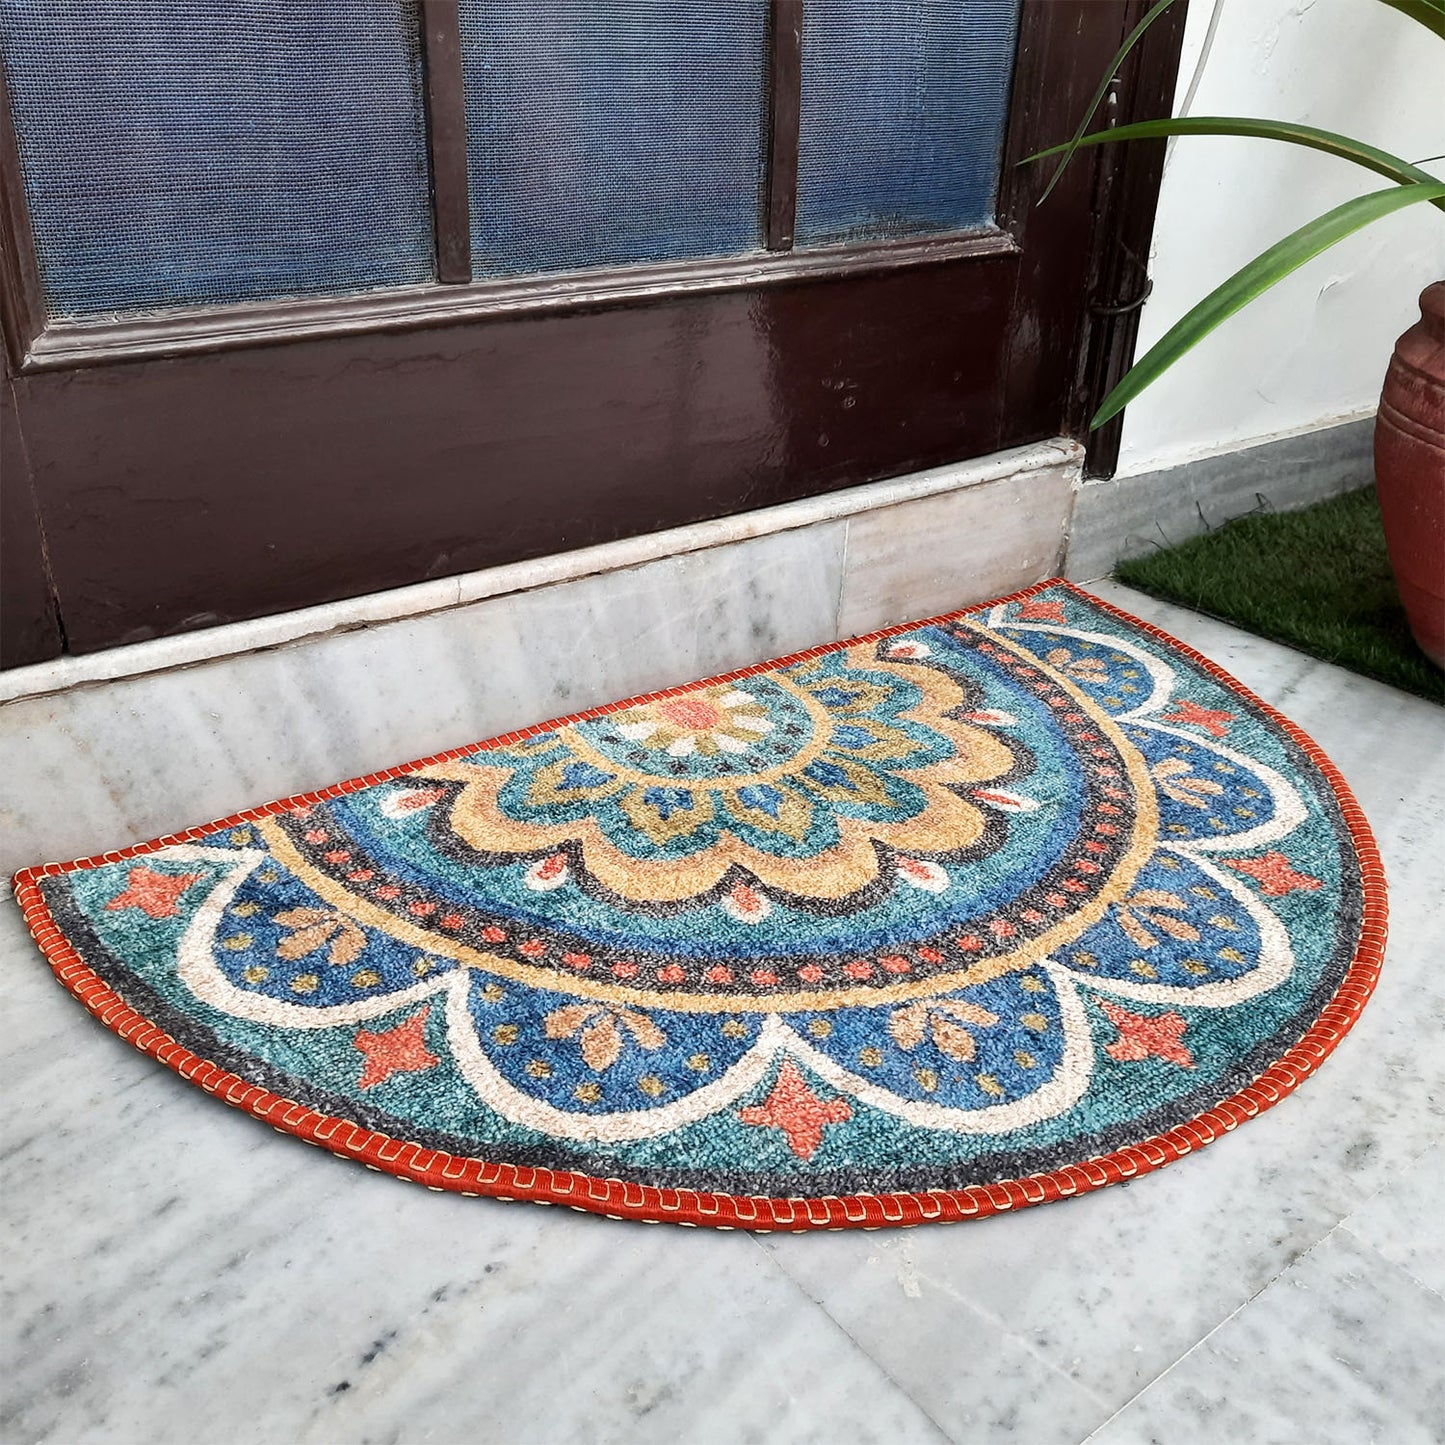 Avioni Home Floor Mats in Beautiful Traditional Rangoli Design